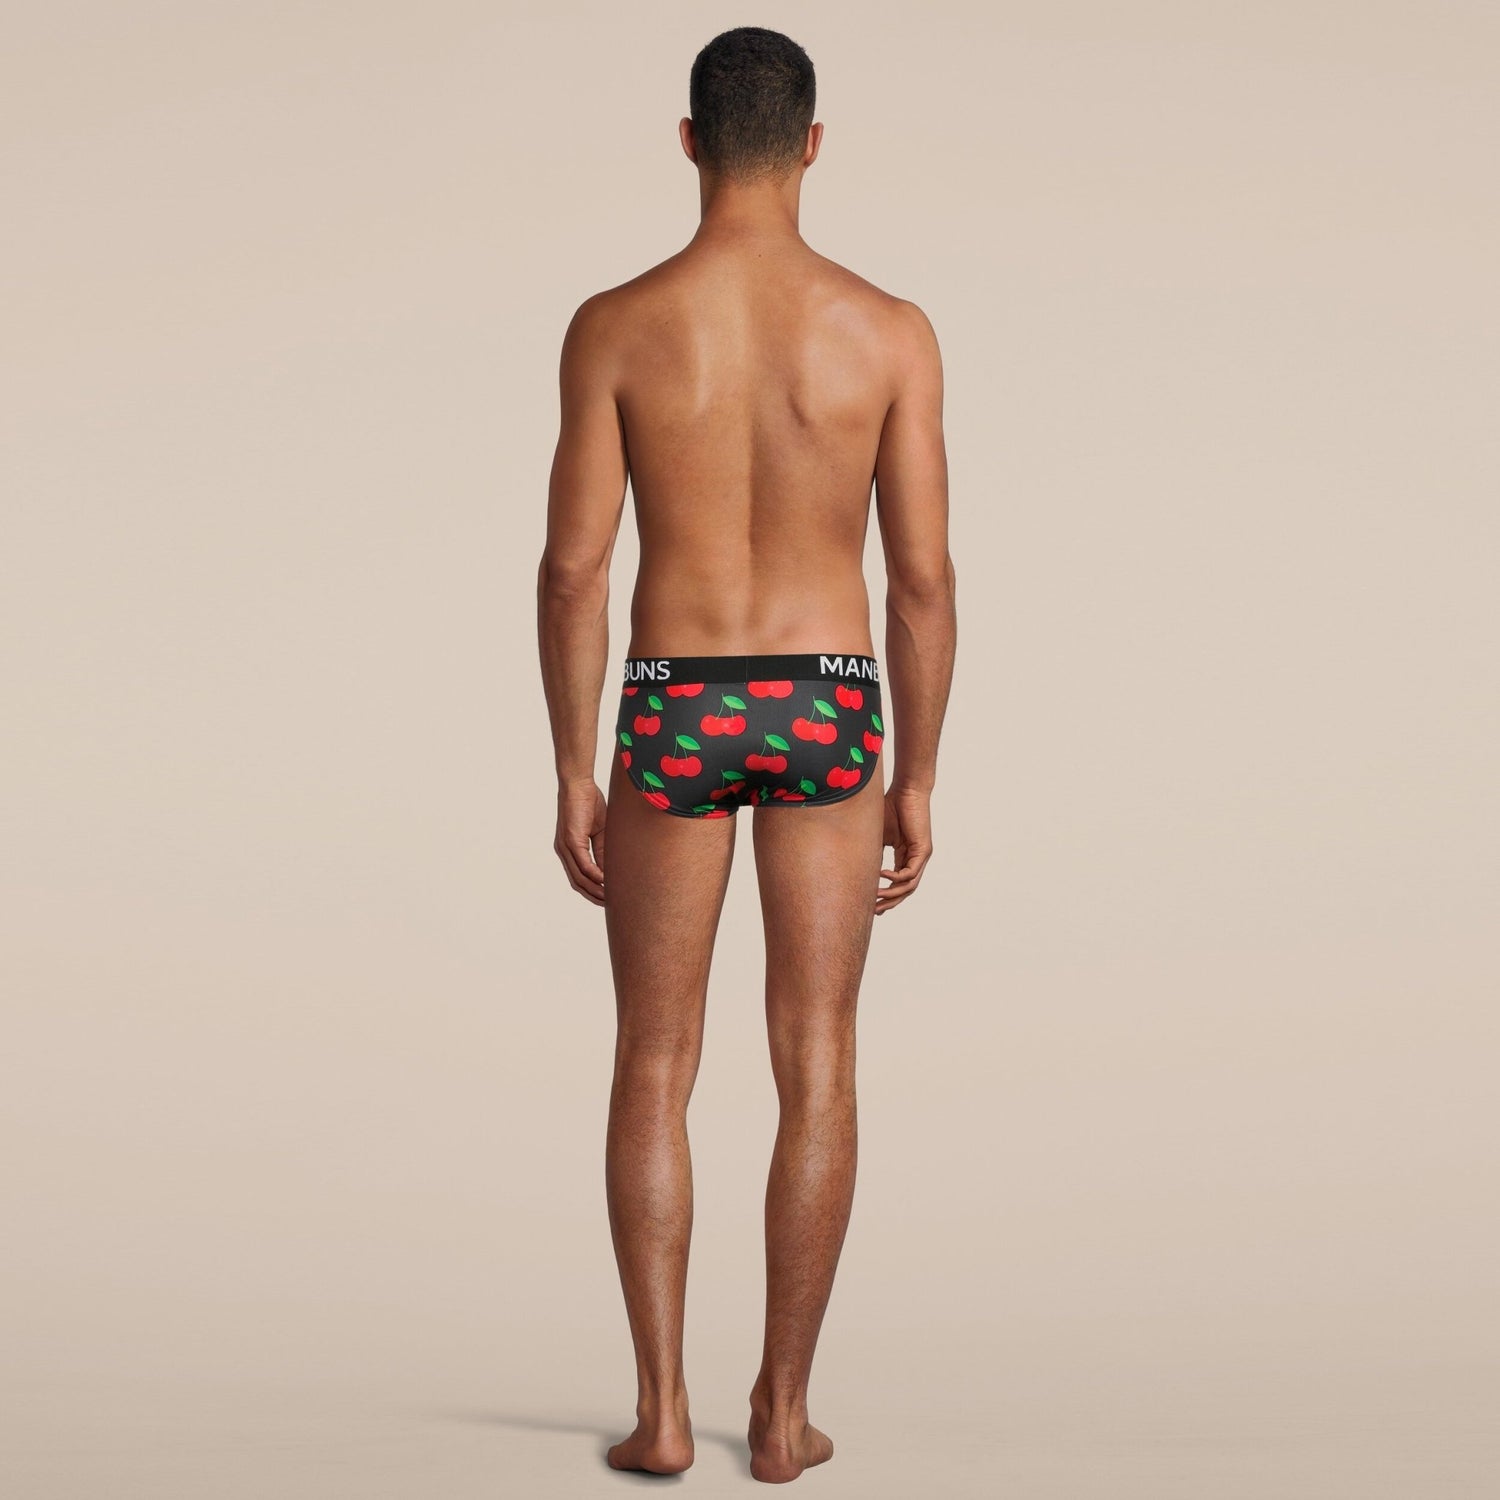 Men's Fun Novelty Peach Print Briefs Underwear – MANBUNS